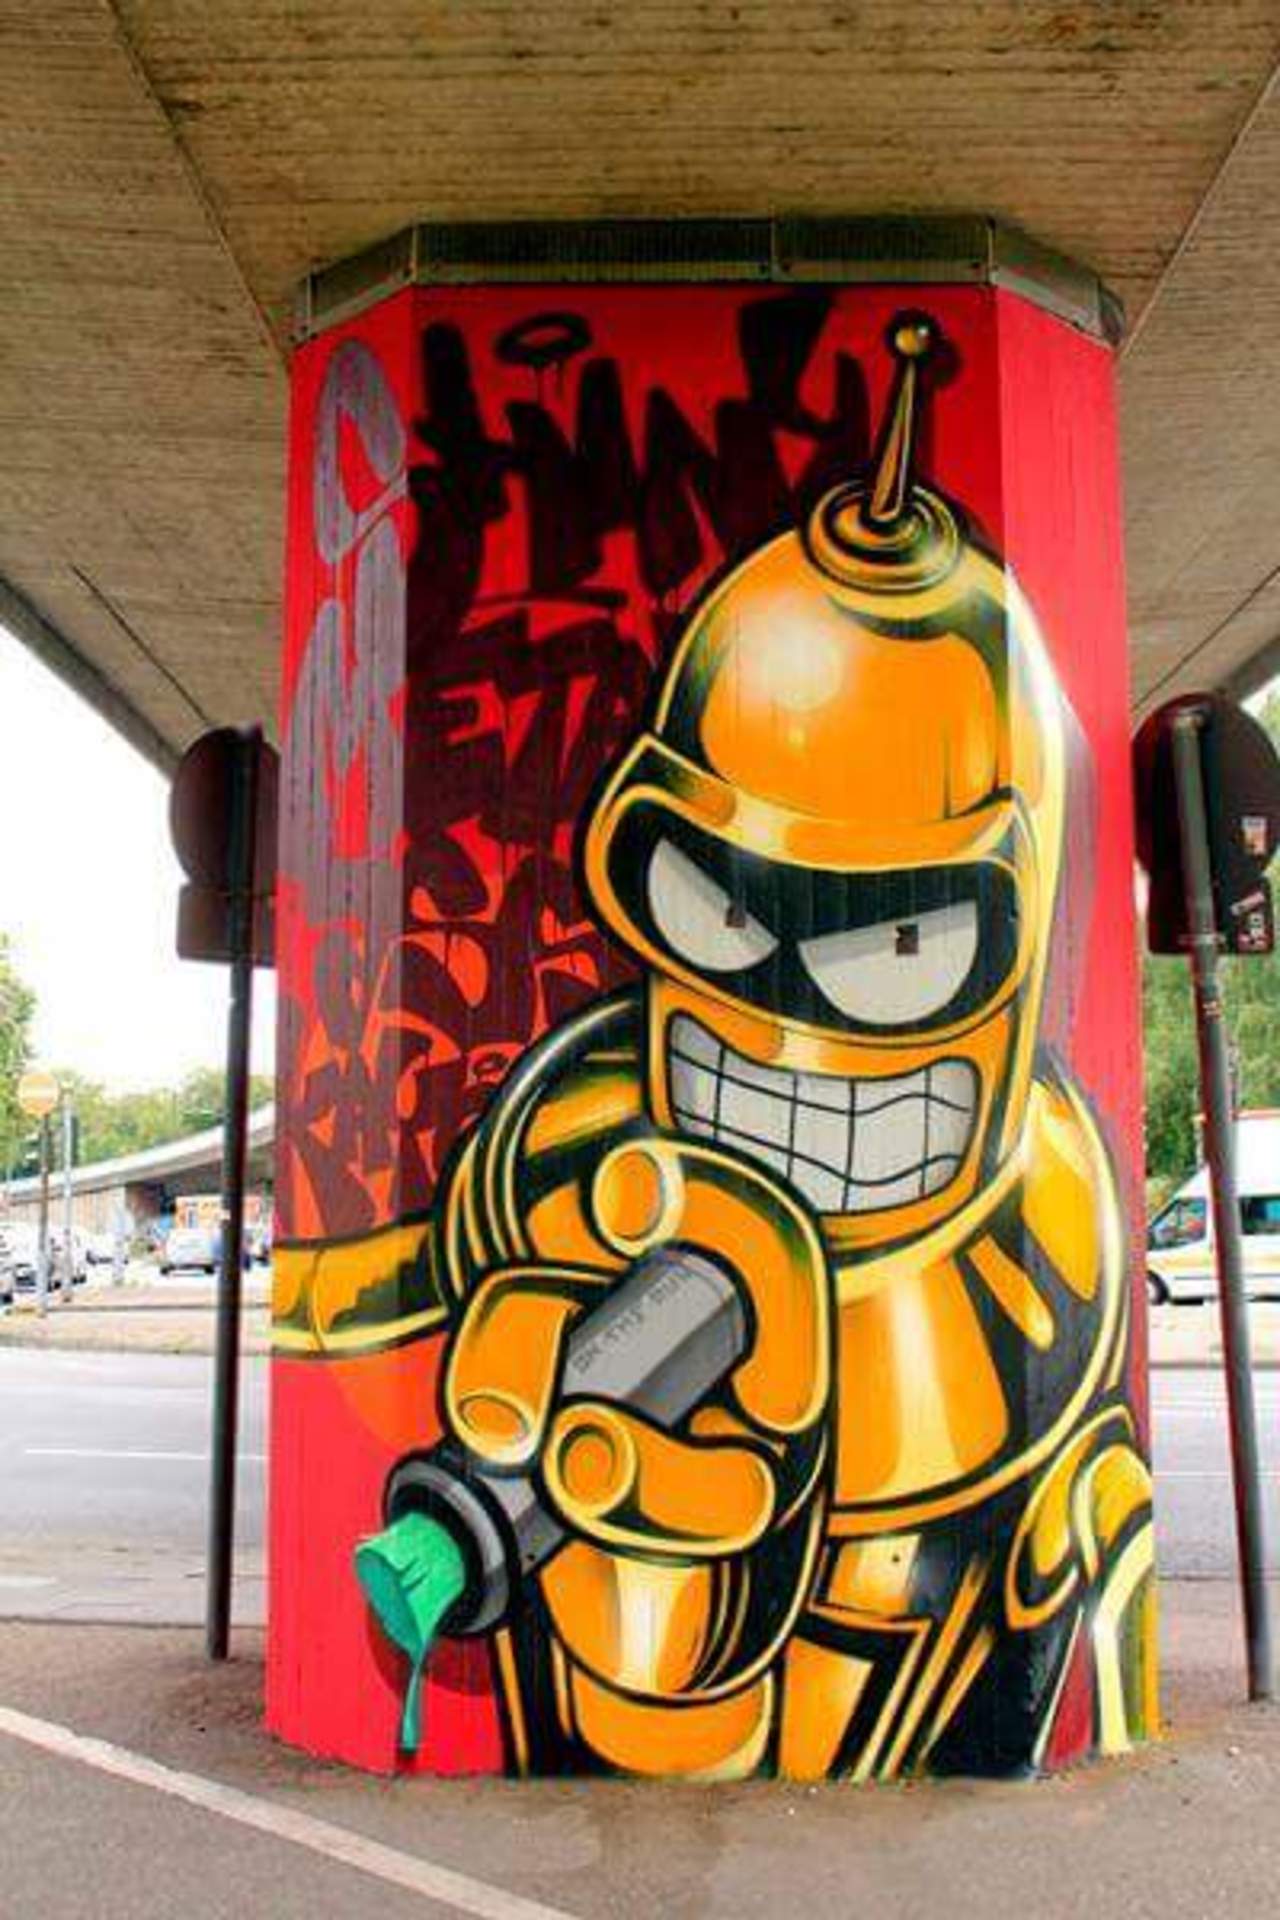 RT @streetartscout: RT @HipHopVandals Sweet #streetart piece featuring recoloured Bender from #Futurama ... Kayo* #graffiti #art @slurmed http://t.co/oABJNLqOBR